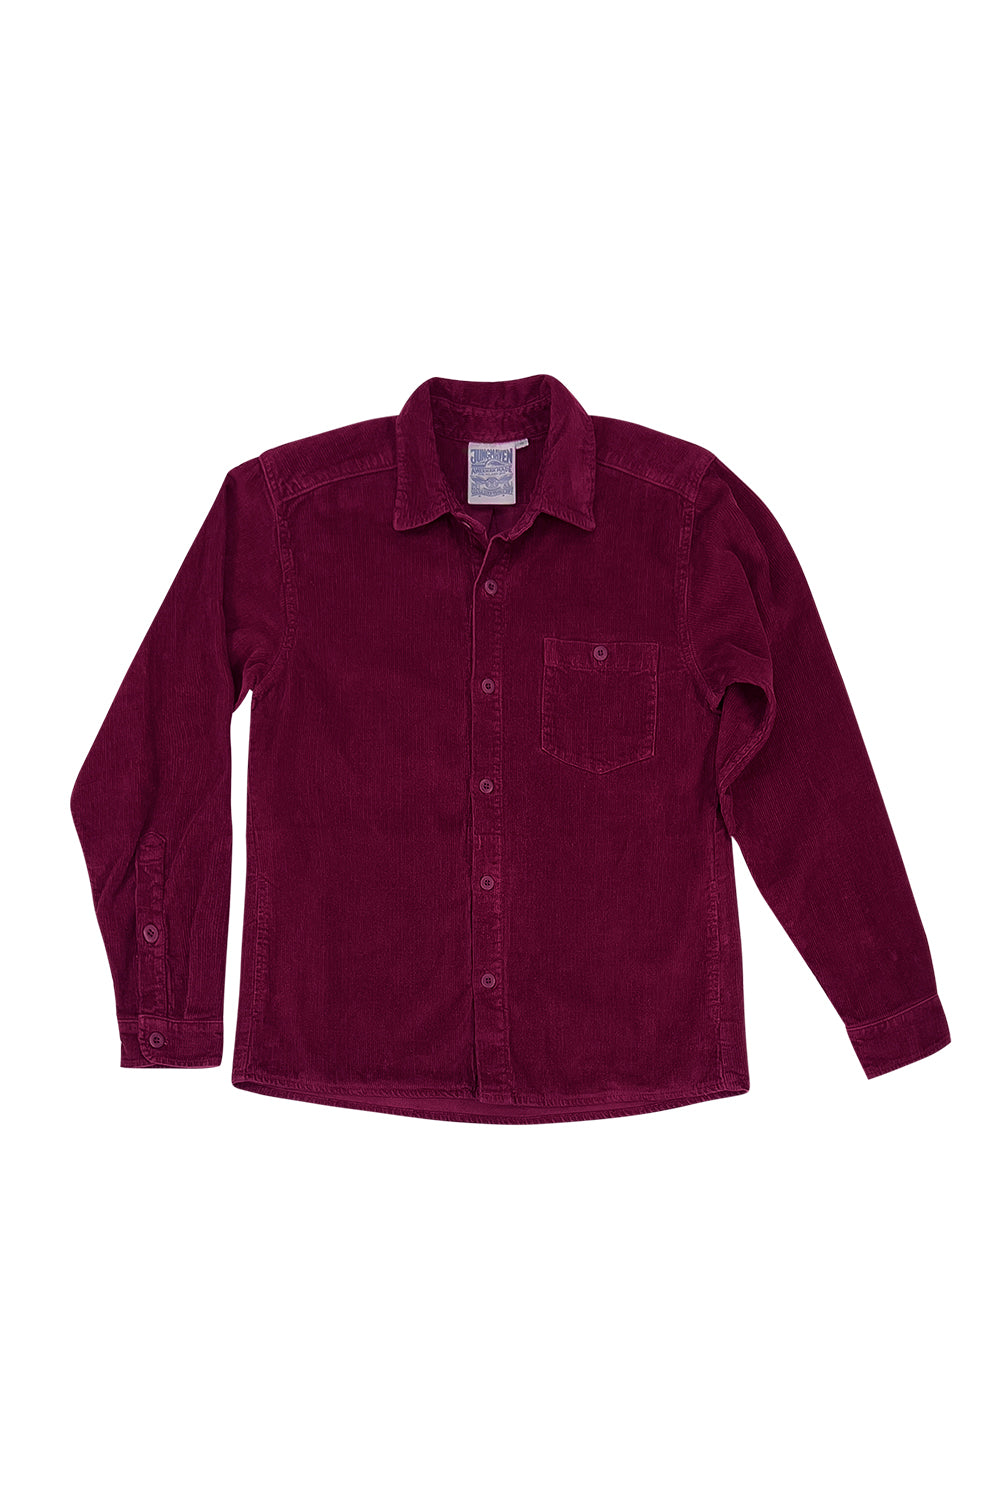 Oxnard Shirt Jacket | Jungmaven Hemp Clothing & Accessories Color: Burgundy